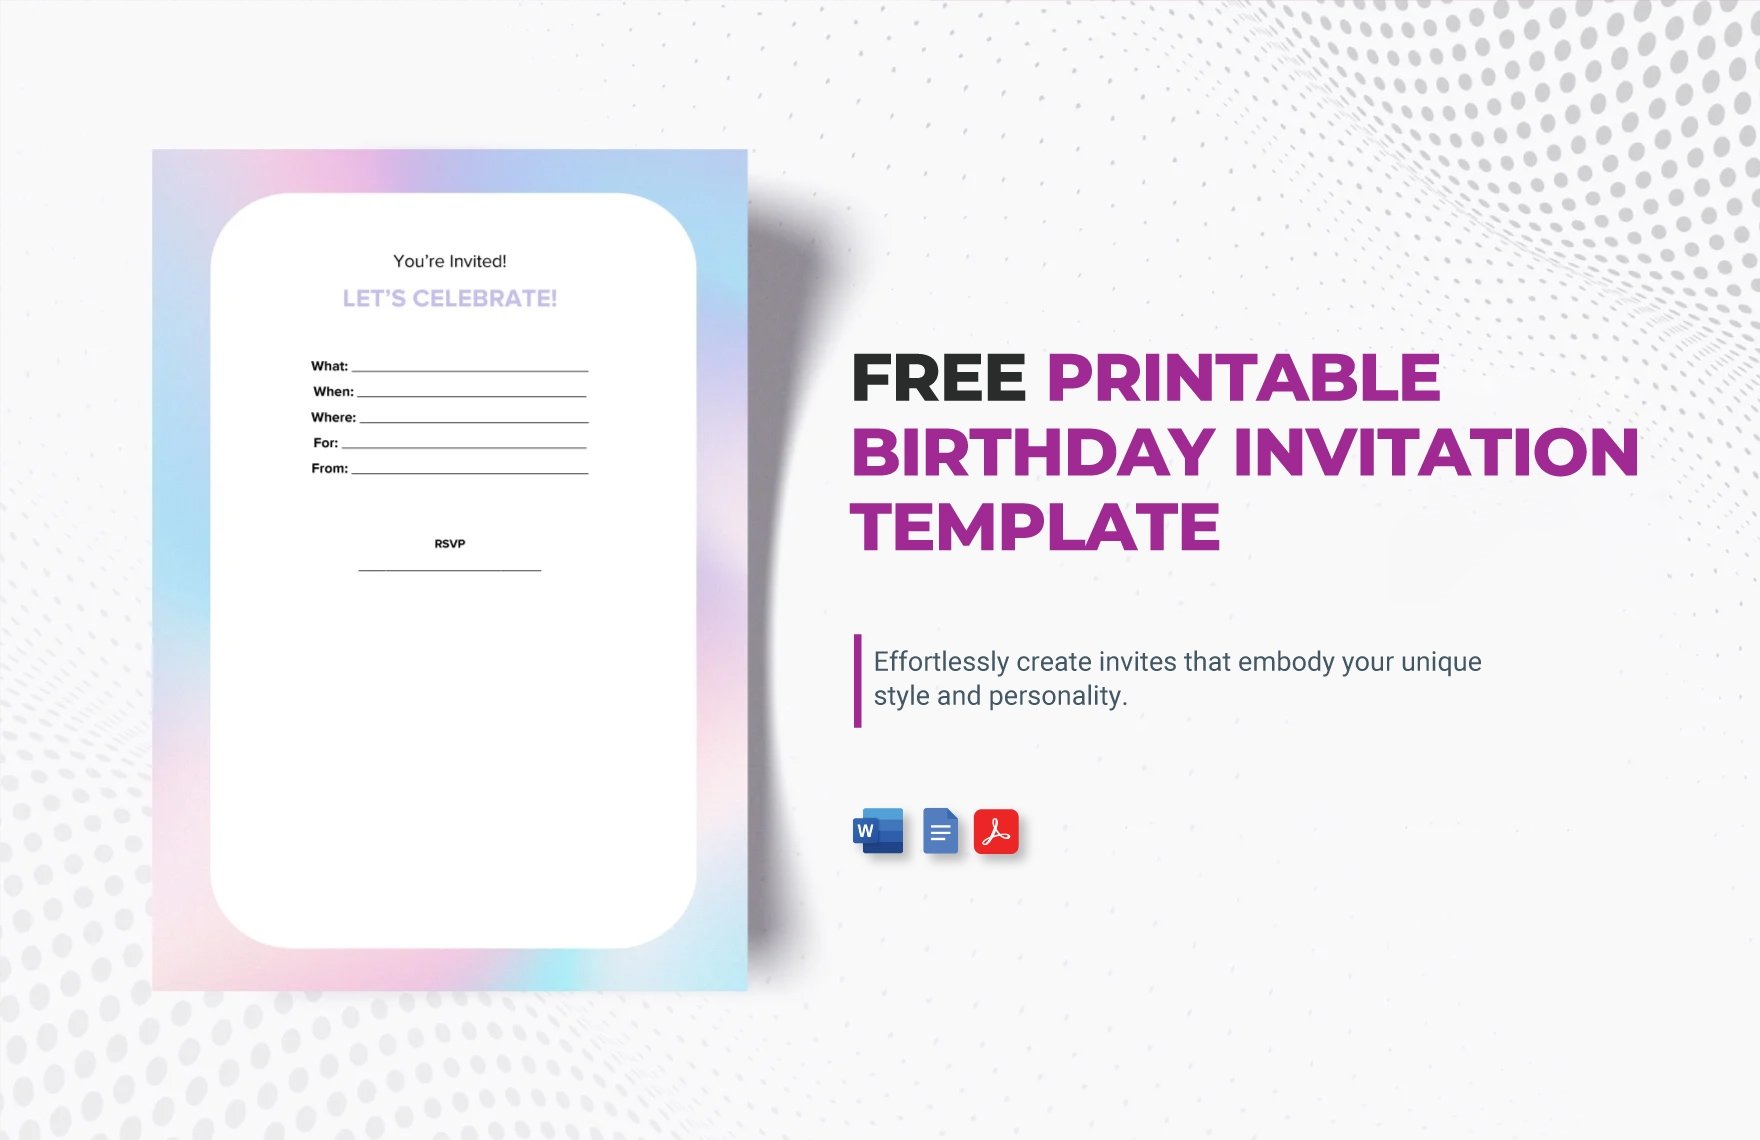 Free Printable Birthday Invitation Template in Word, Google Docs, PDF